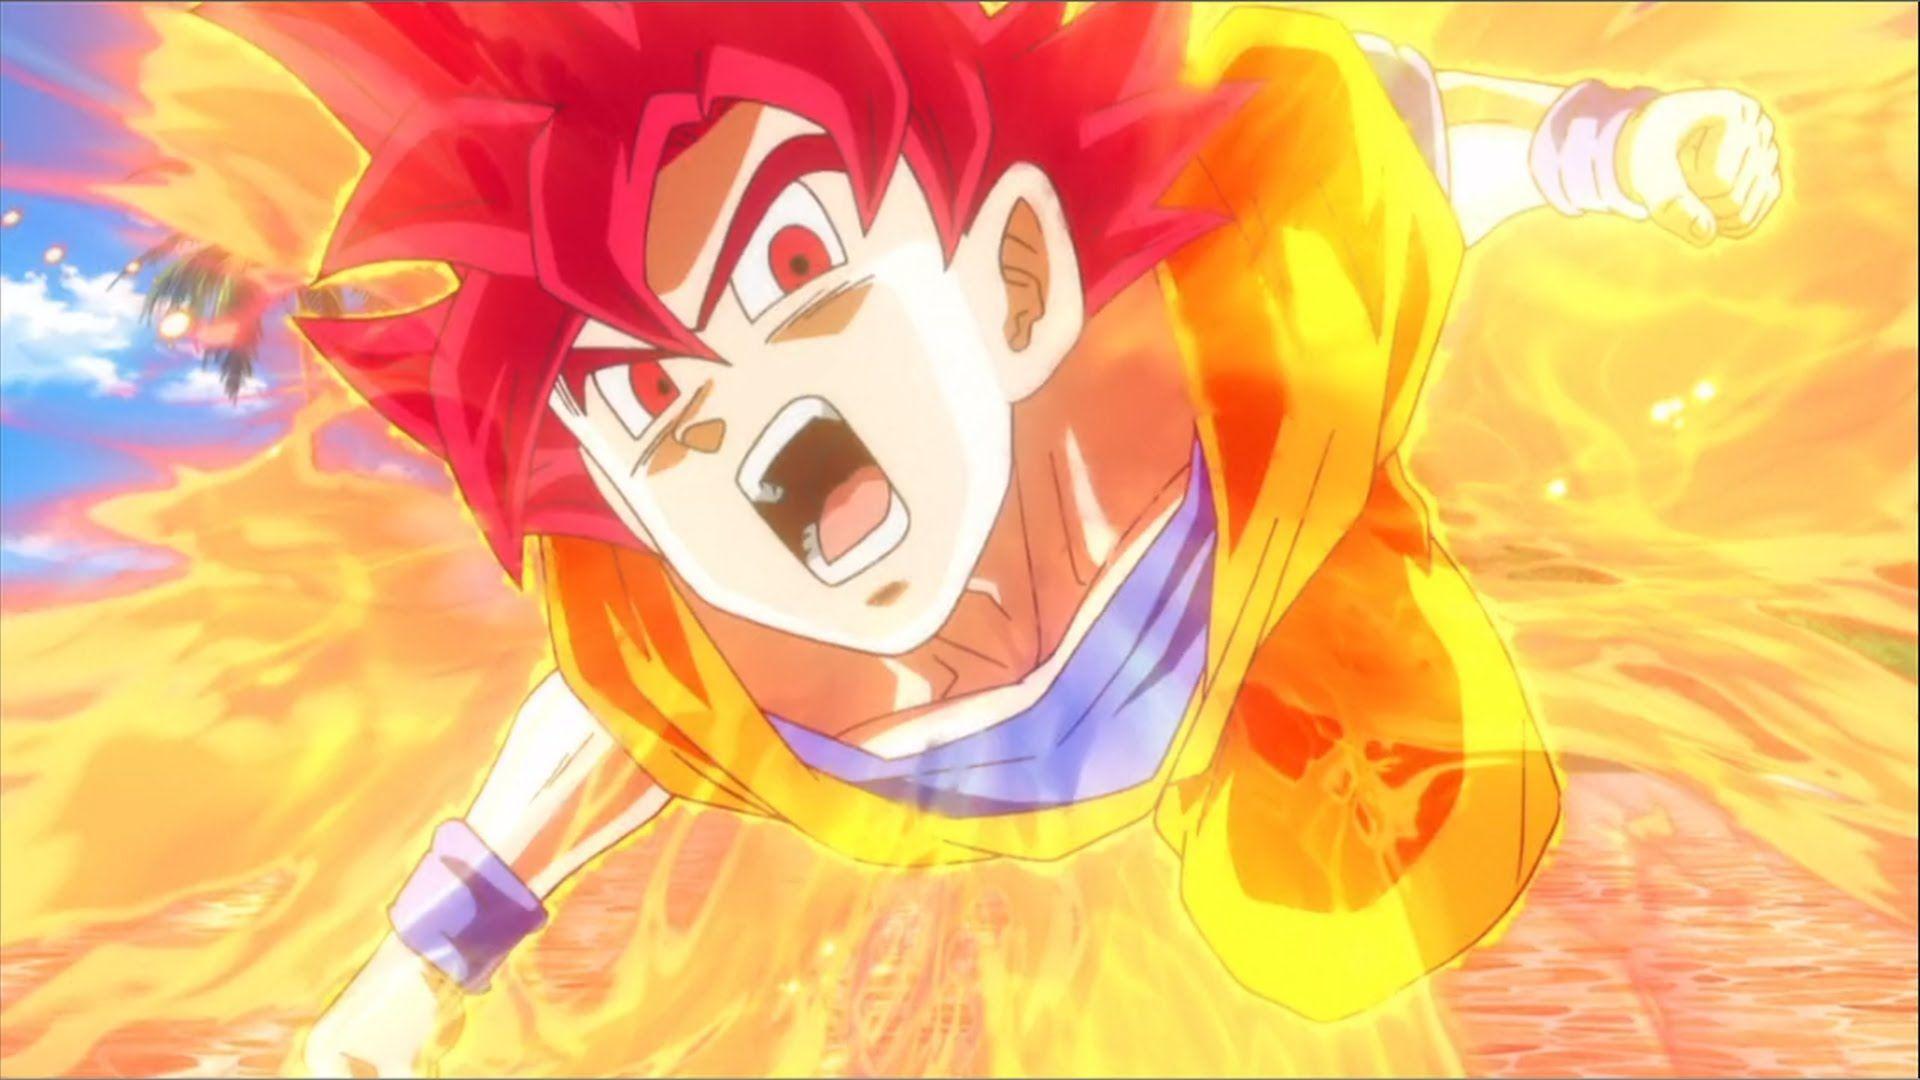 Son Goku Super Saiyan God Wallpaper. Goku super saiyan god, Dragon ball super, Super saiyan god